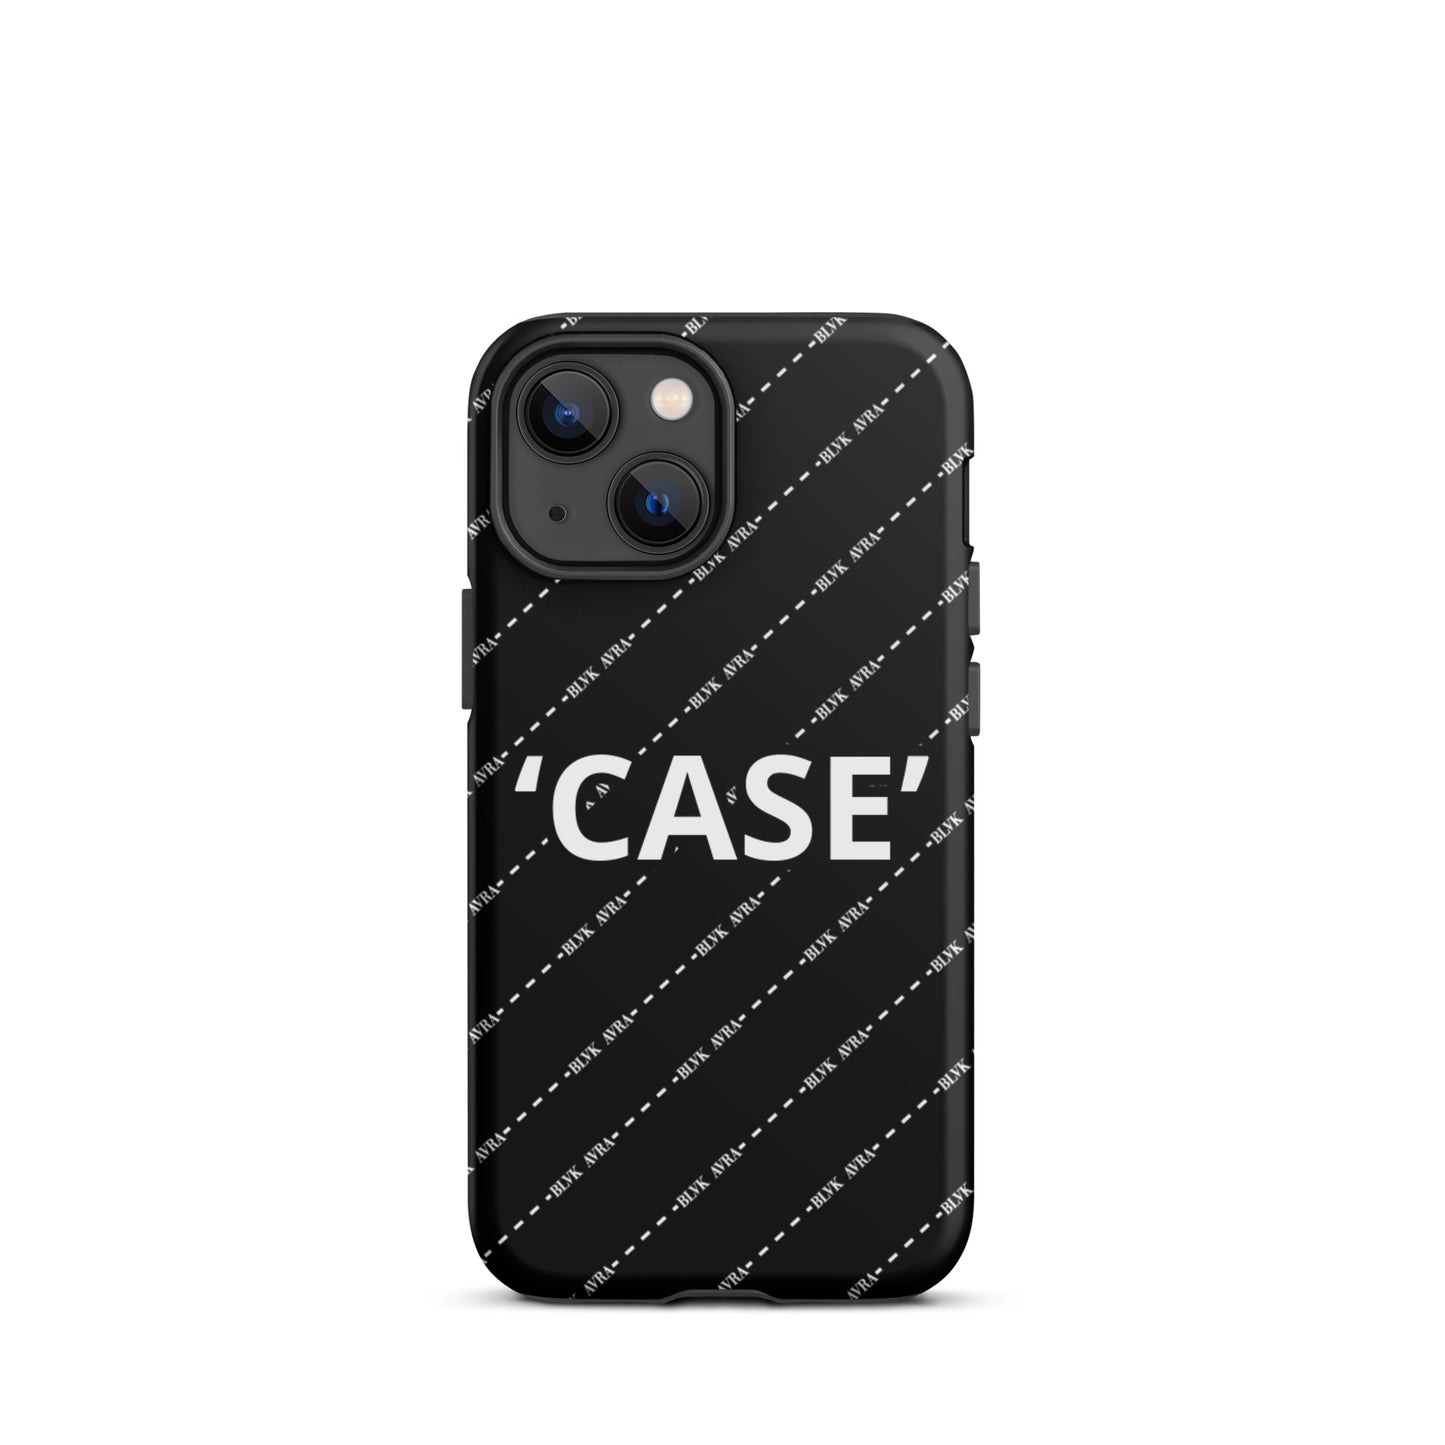 Tough iPhone case